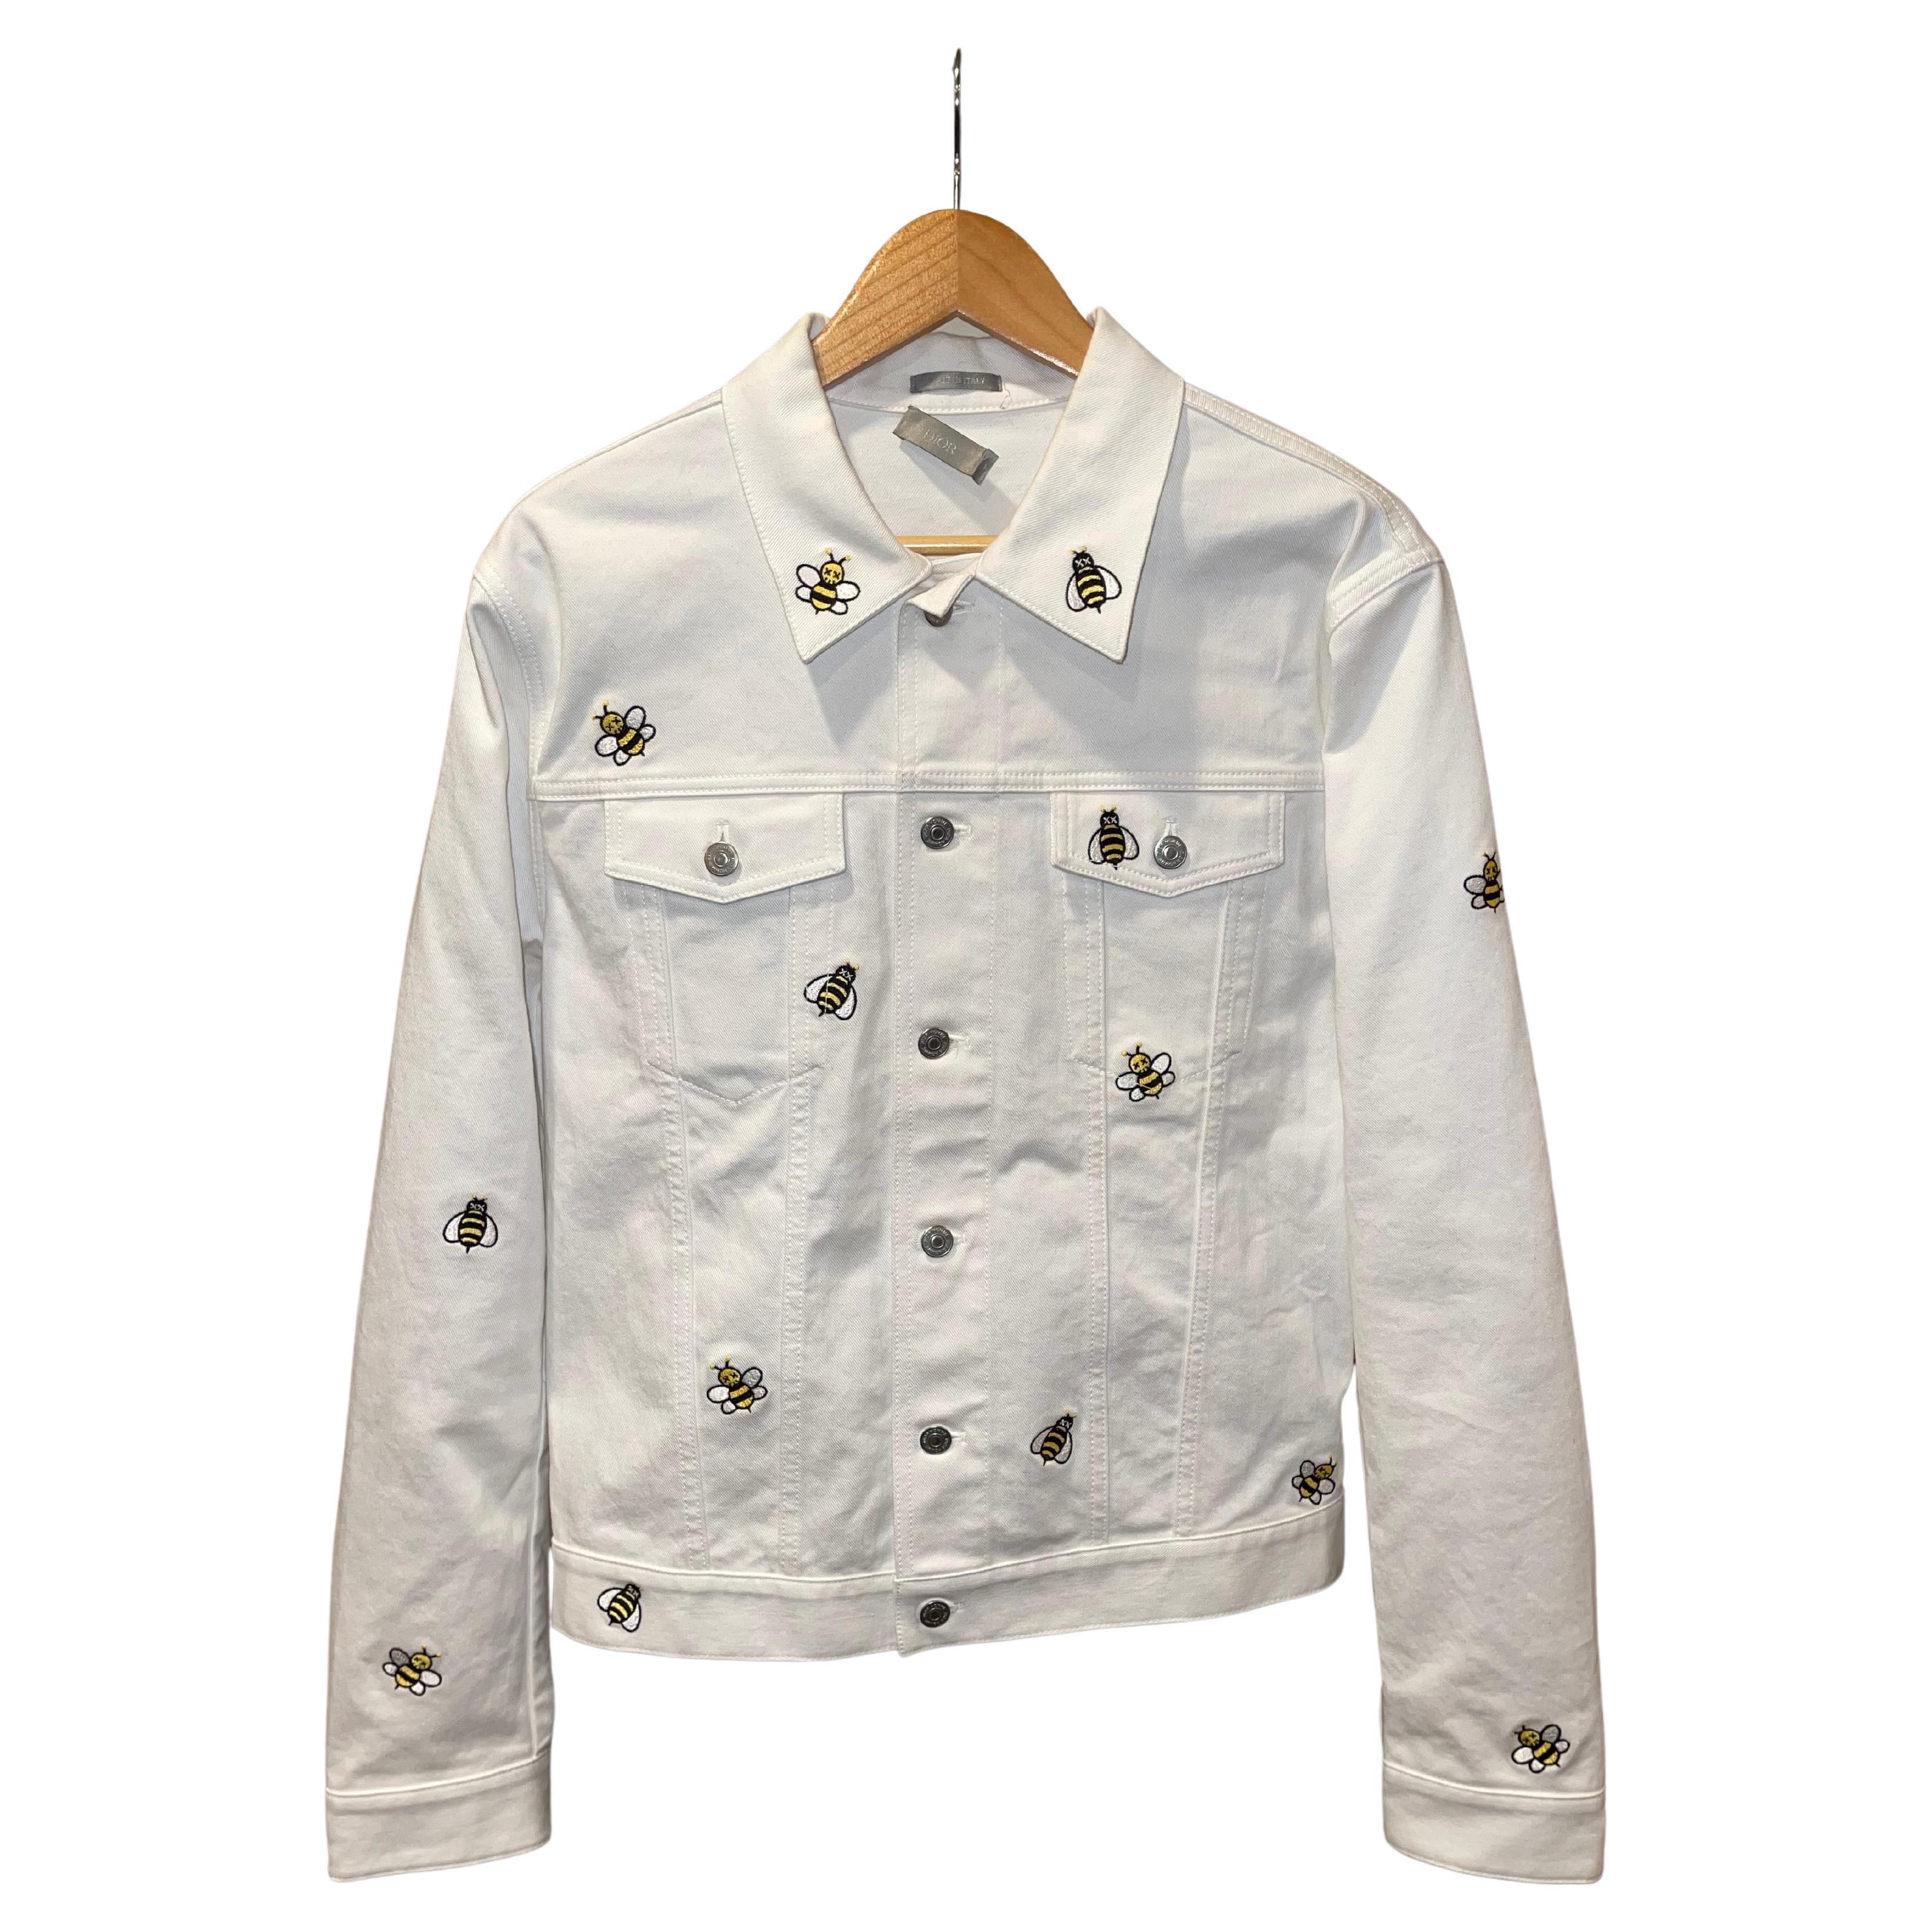 RARE Dior x Kaws Bees White Denim Jacket size 52 For Sale